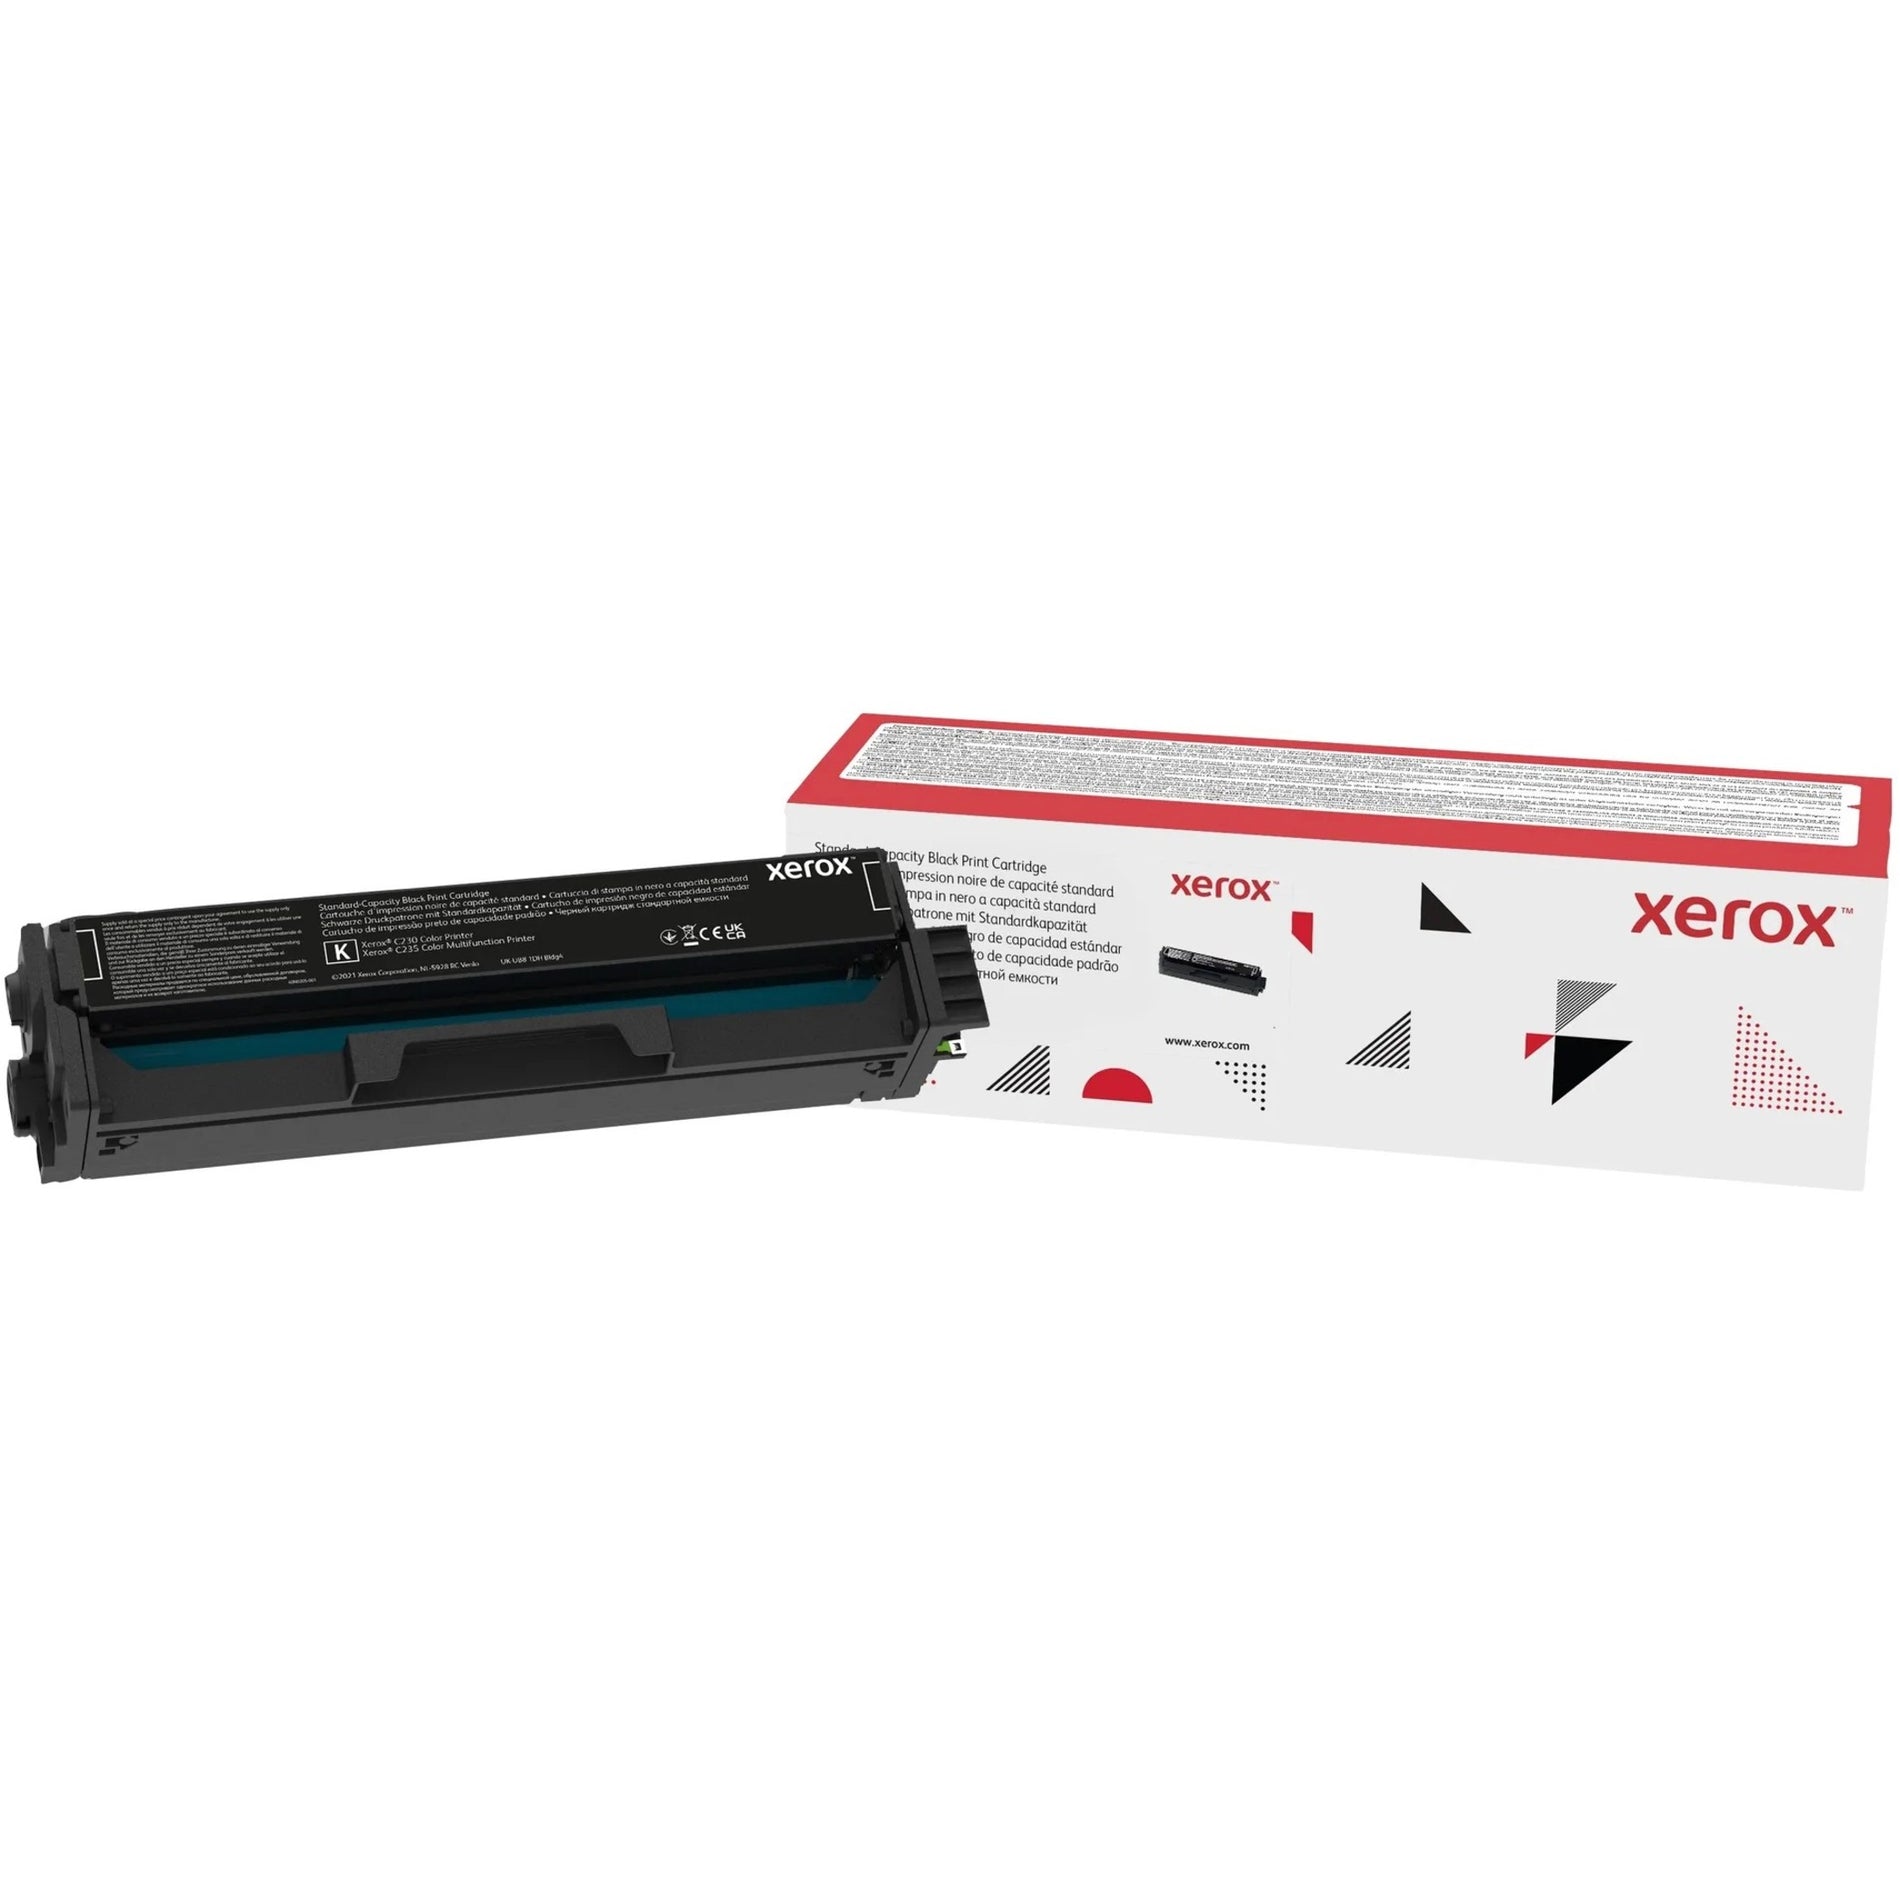 Xerox 006R04383 C230 / C235 Black Standard Capacity Toner Cartridge (1,500 pages), Original